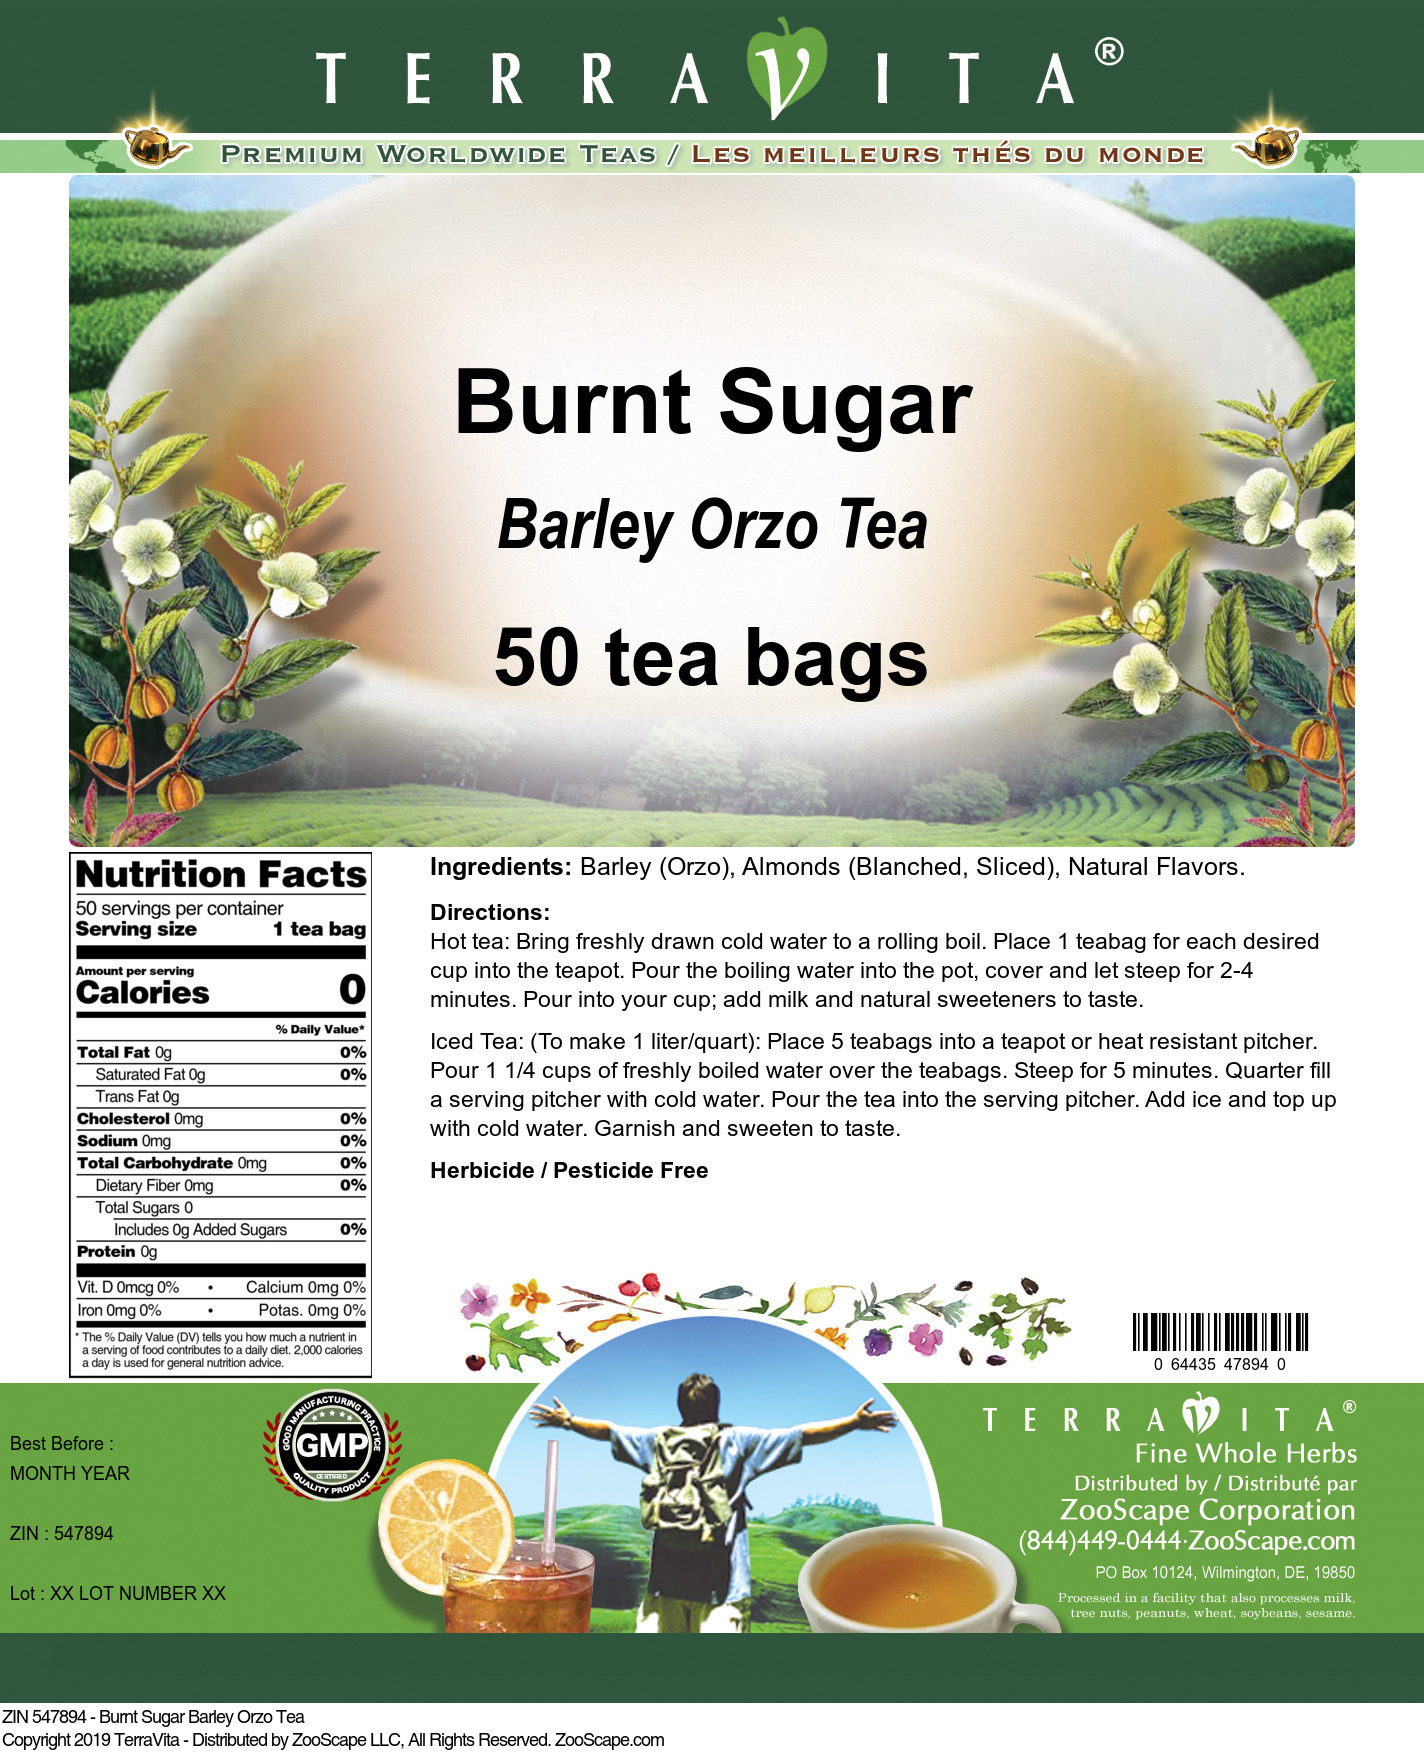 Burnt Sugar Barley Orzo Tea - Label